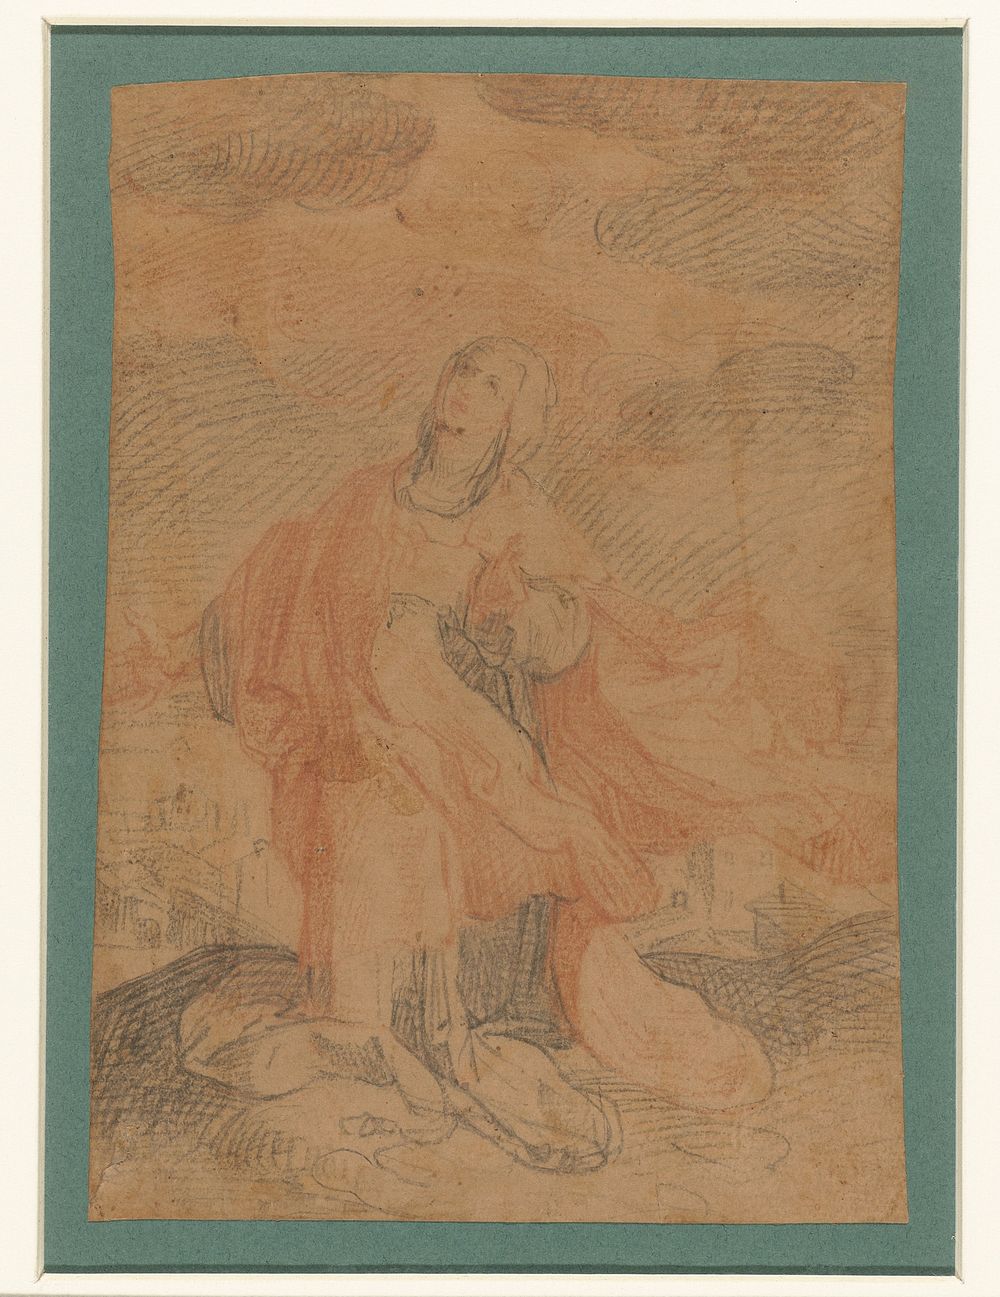 Heilige Michelina (1570 - 1620) by Antonio Viviani and Federico Barocci